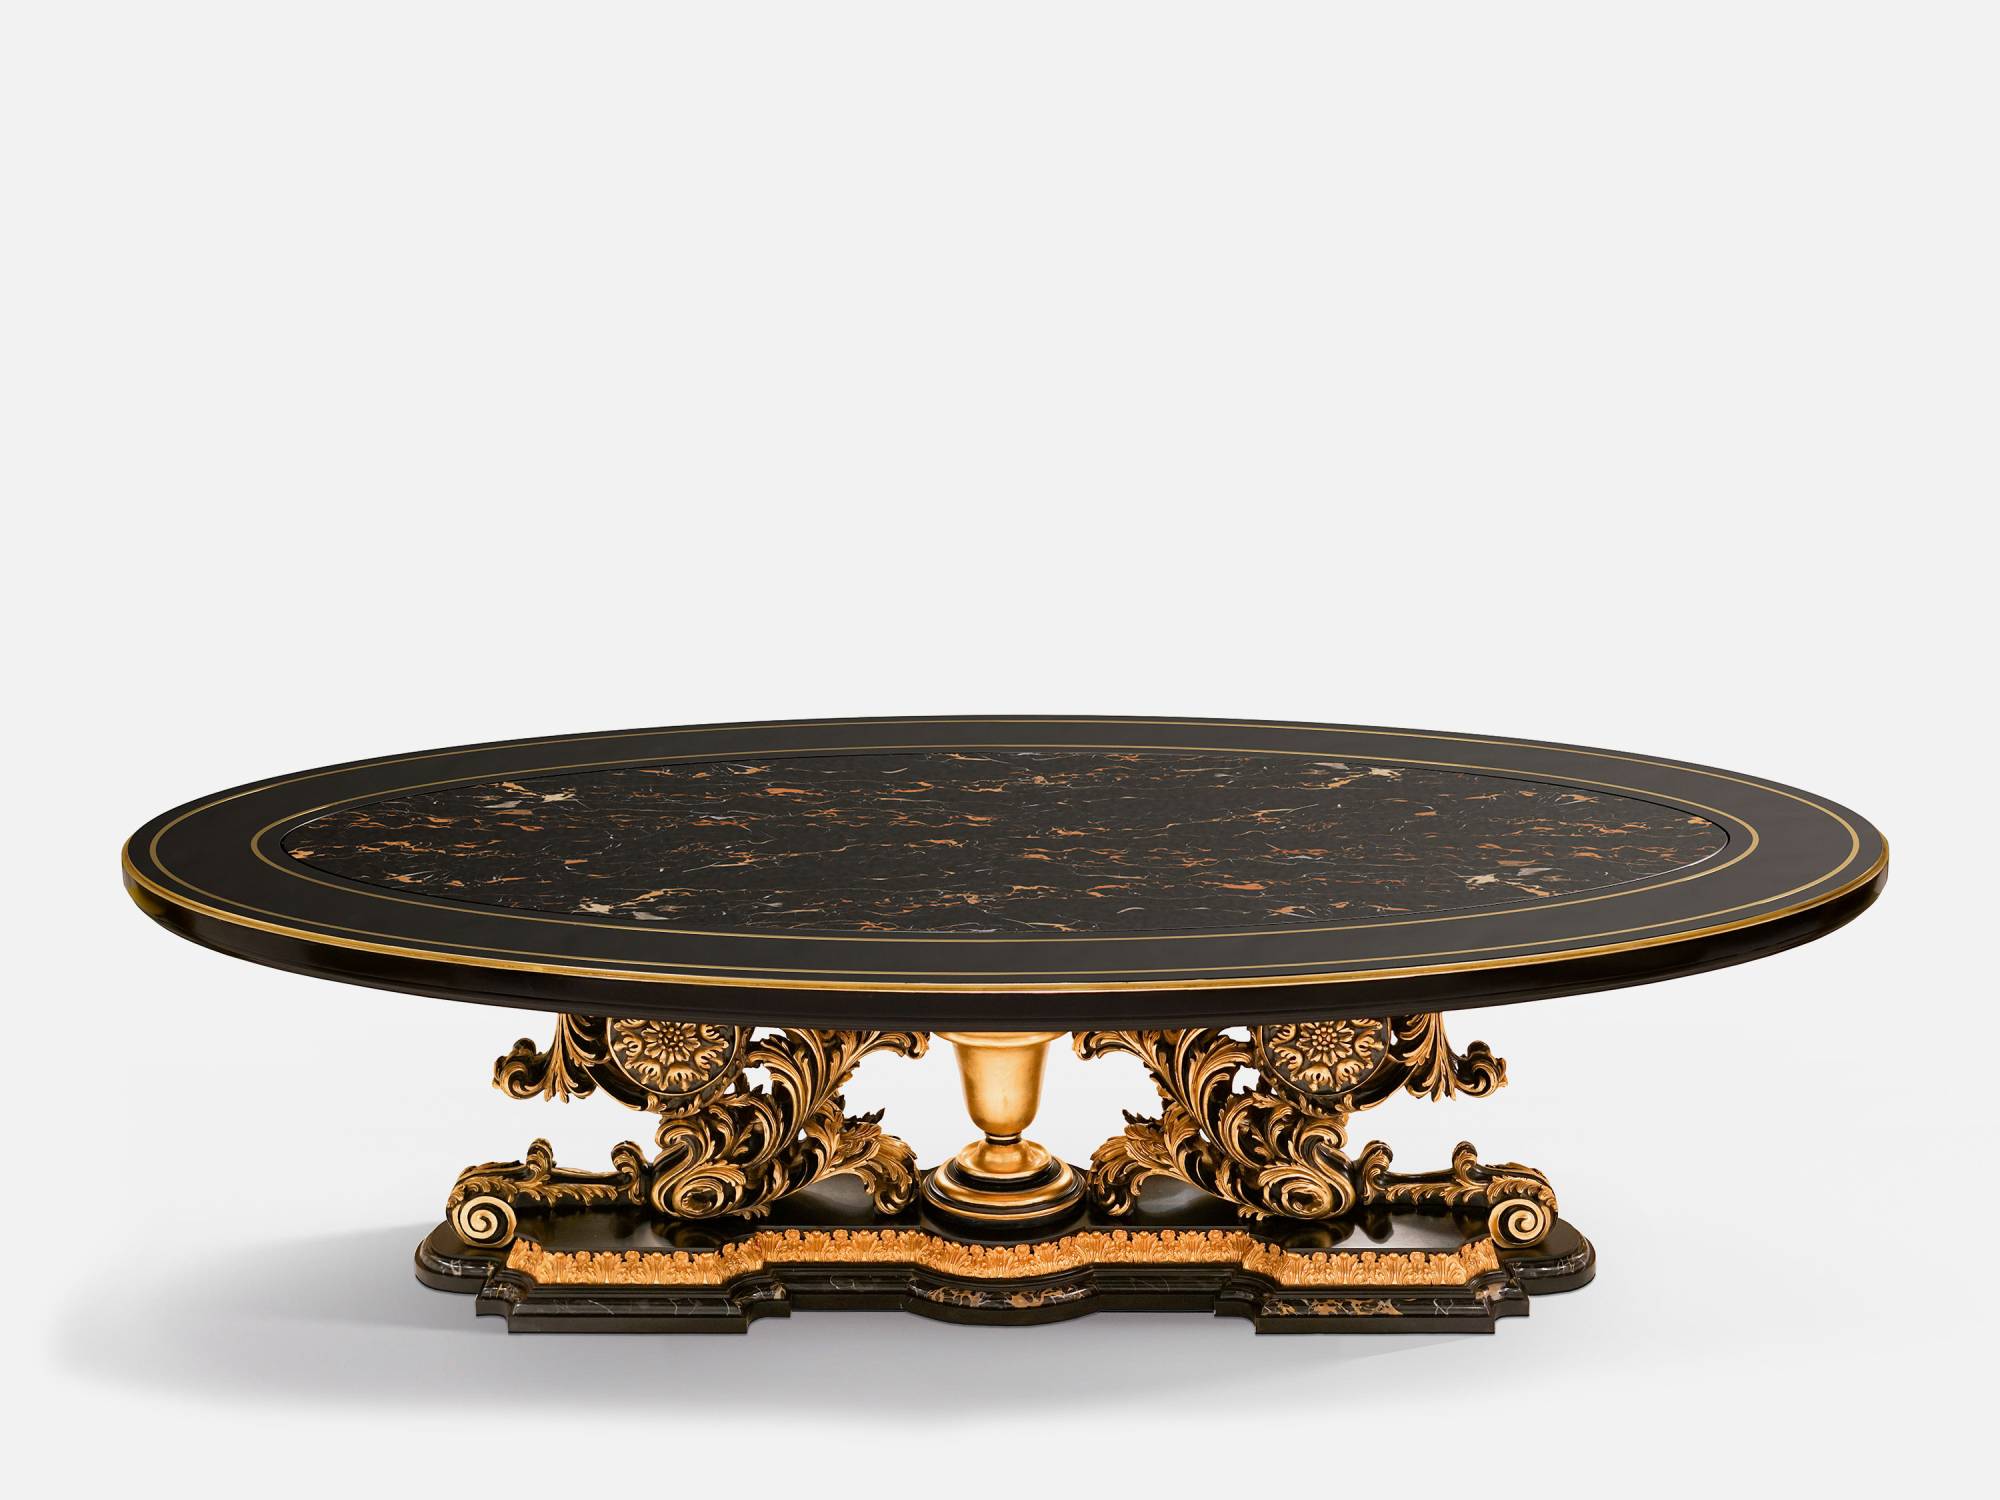 ART. 2204 – C.G. Capelletti Italian Luxury Classic Tables. Made in Italy classic interior design